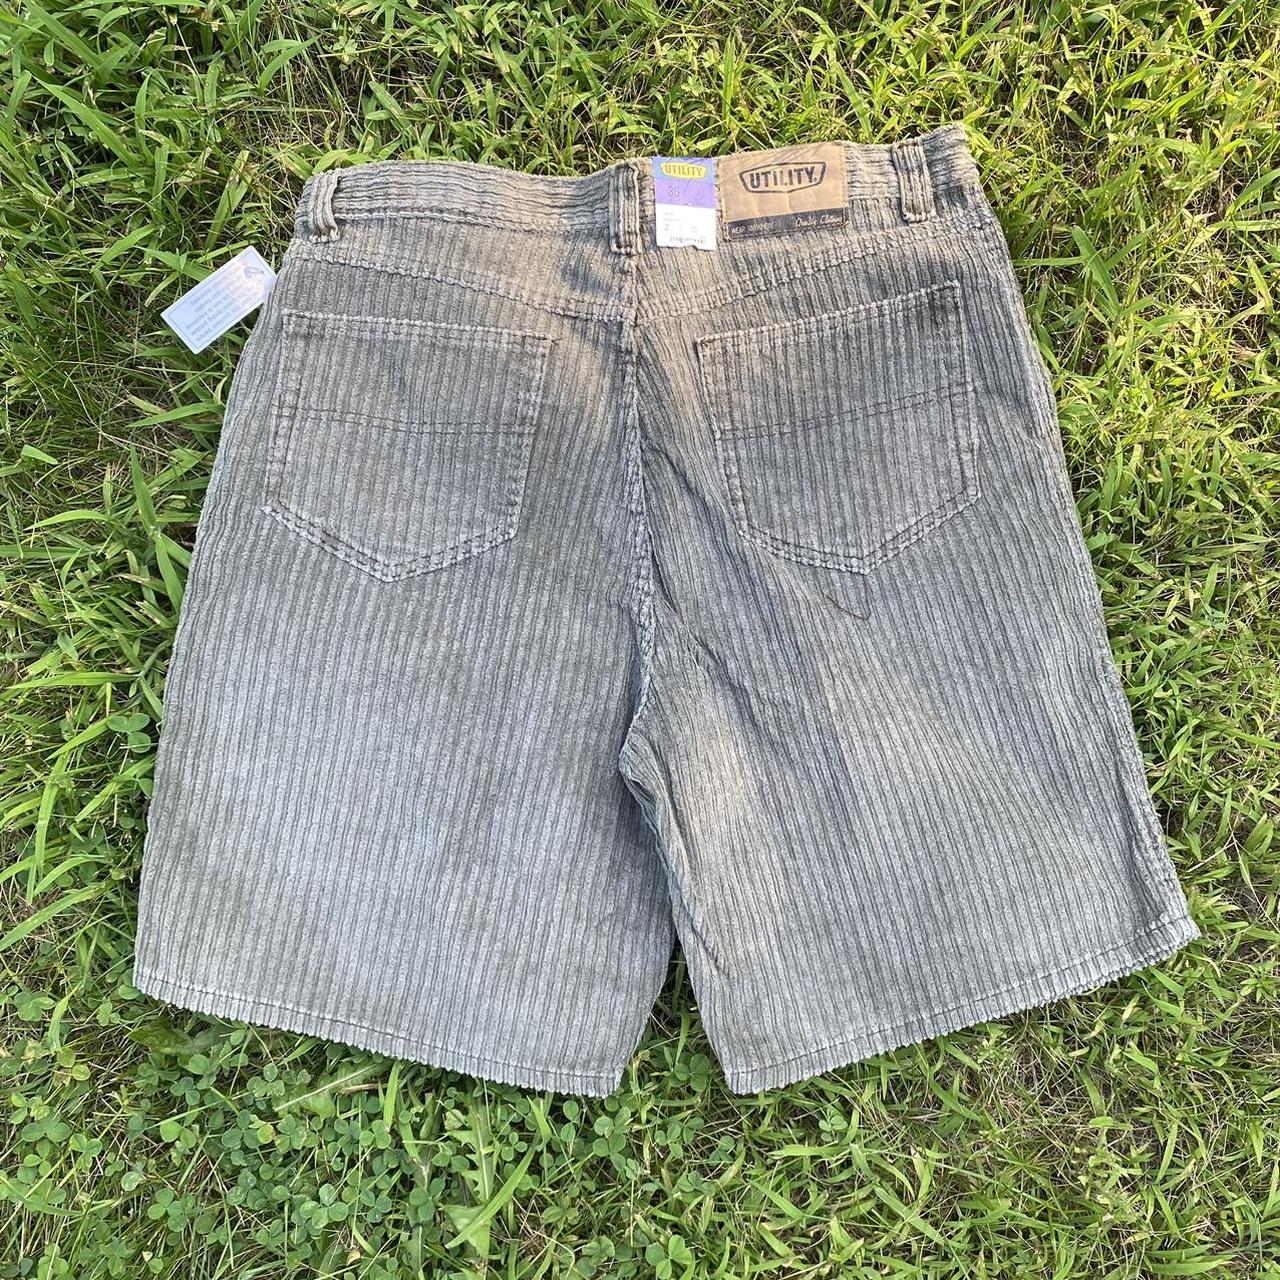 Vintage 90s Corduroy Gray/Brown Shorts Size 36 NWT... - Depop